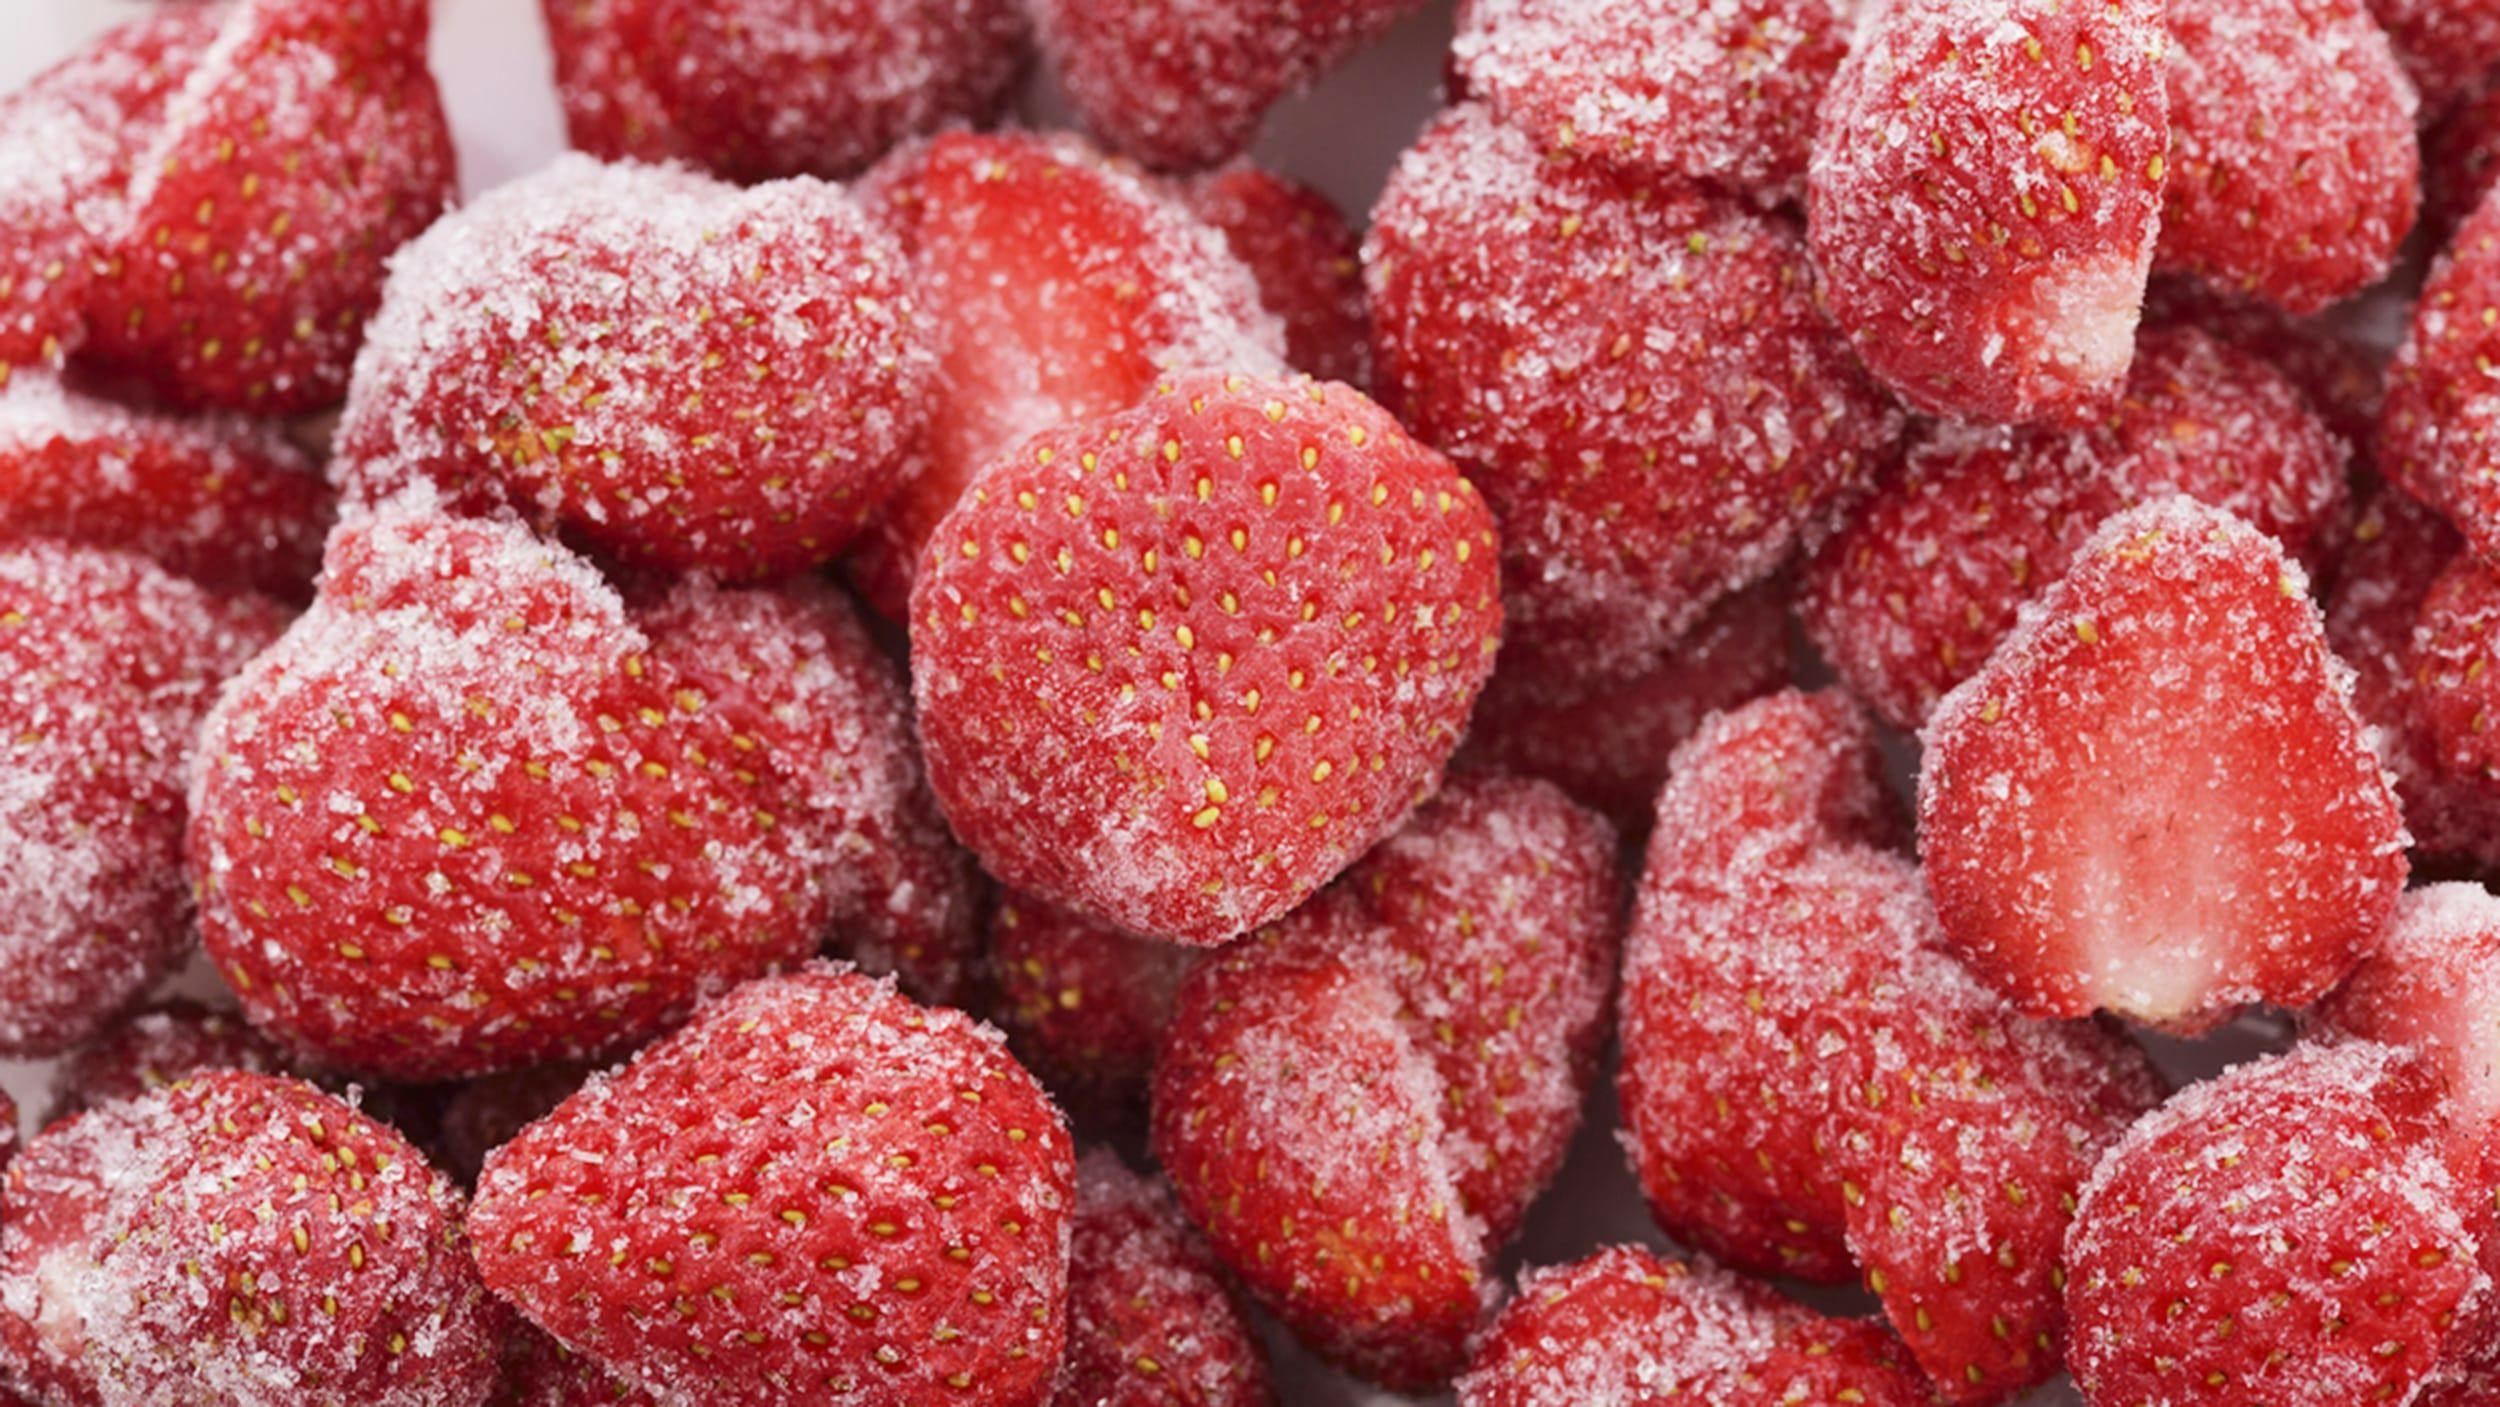 Frozen Strawberries Today 160902 Tease Min